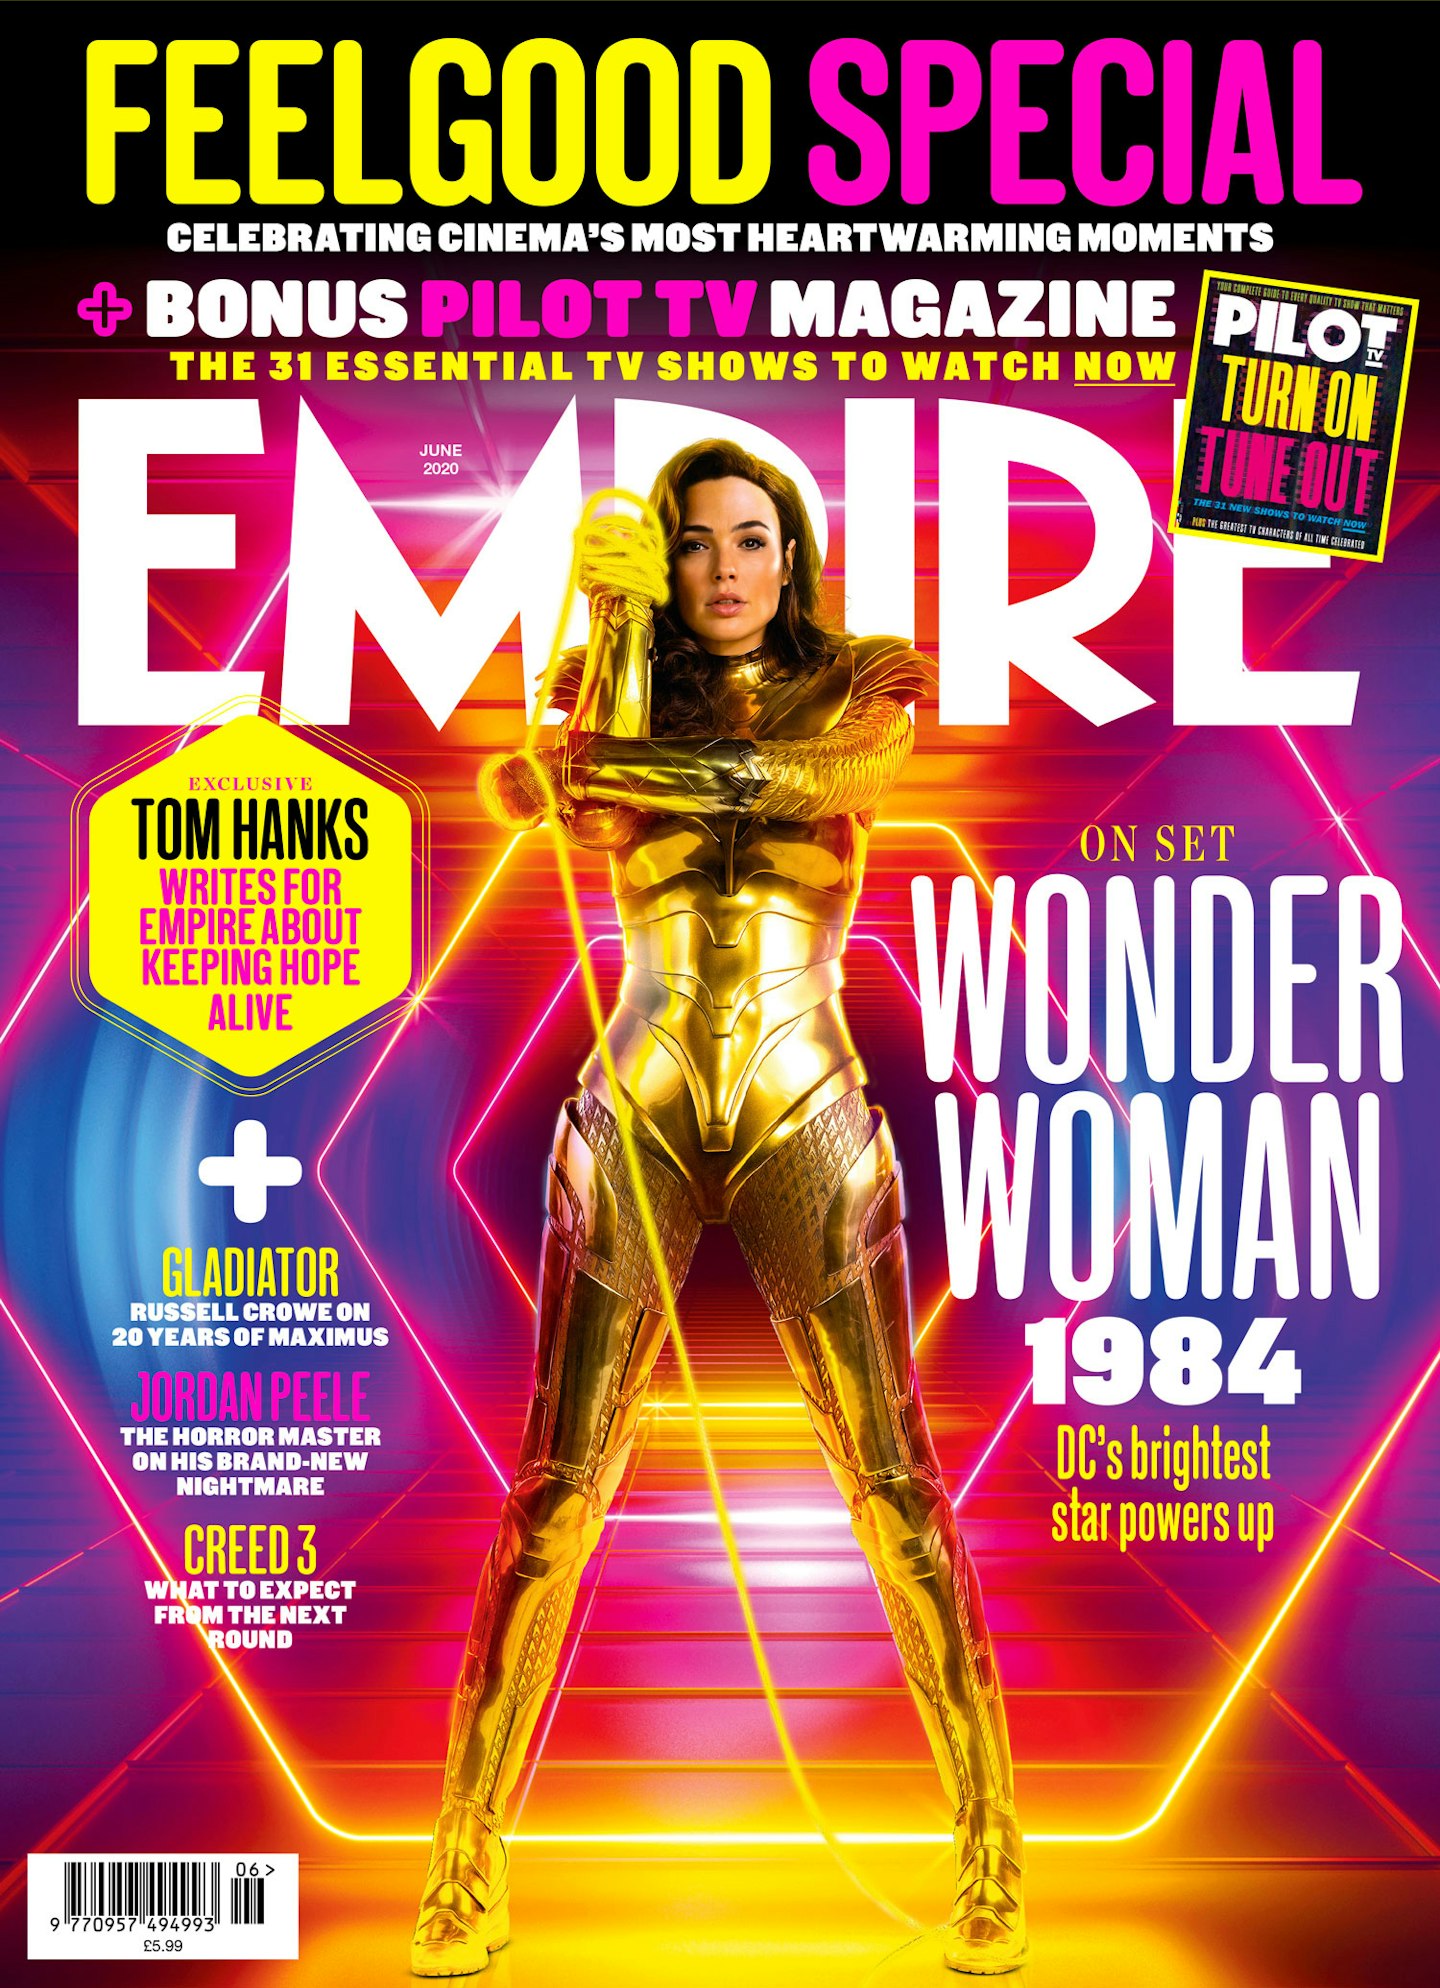 Empire – June 2020 cover – Wonder Woman 1984